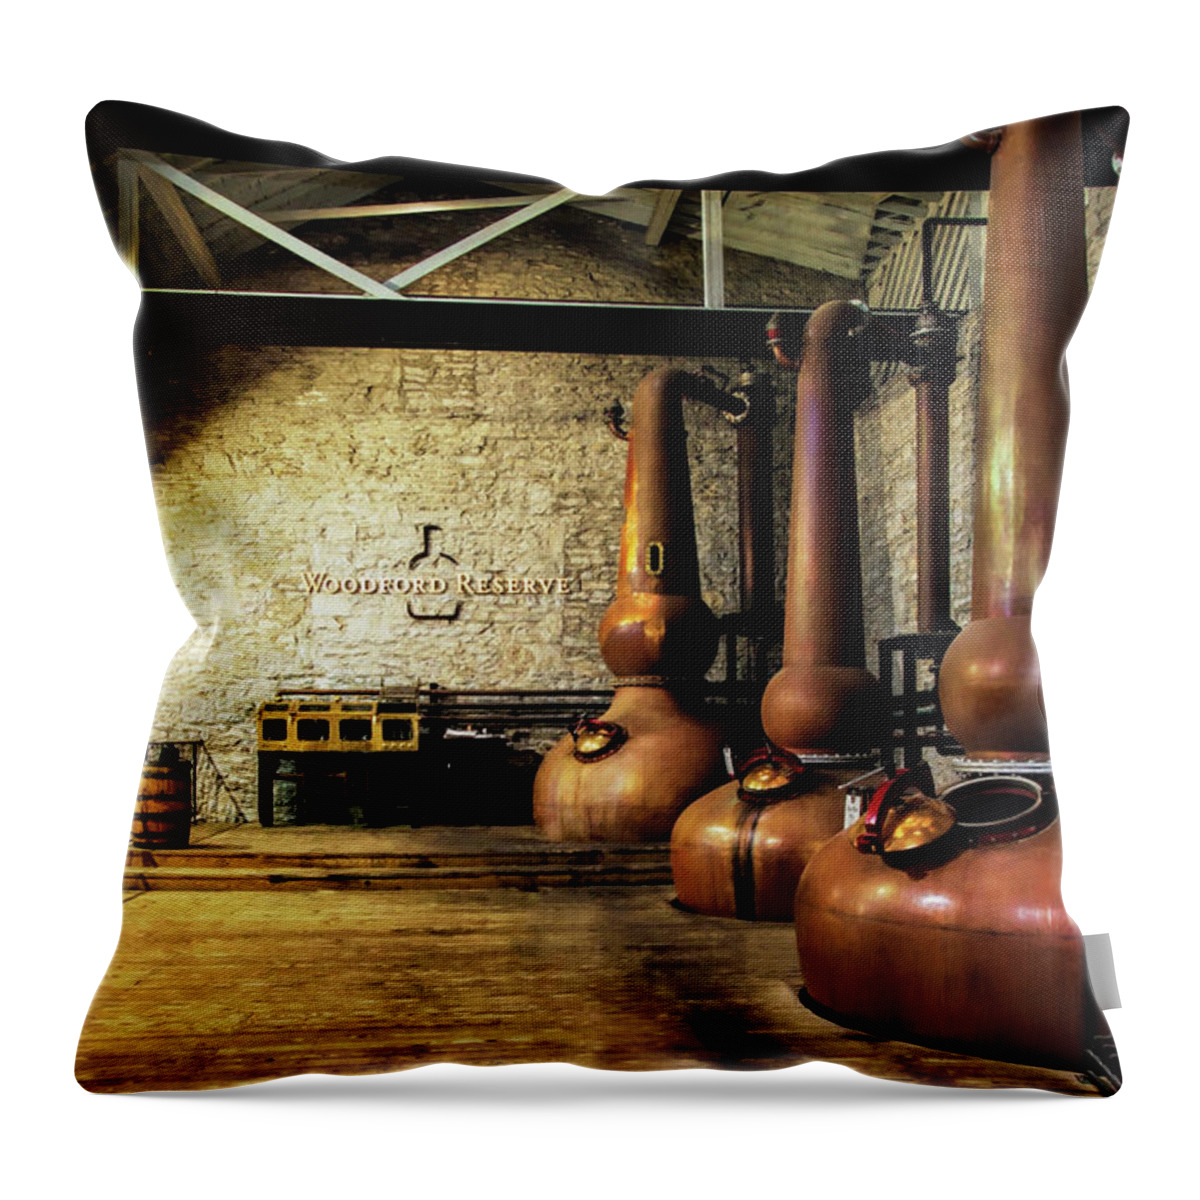 Woodford Reserve Bourbon Stills Throw Pillow featuring the photograph Copper Still House by Karen Varnas